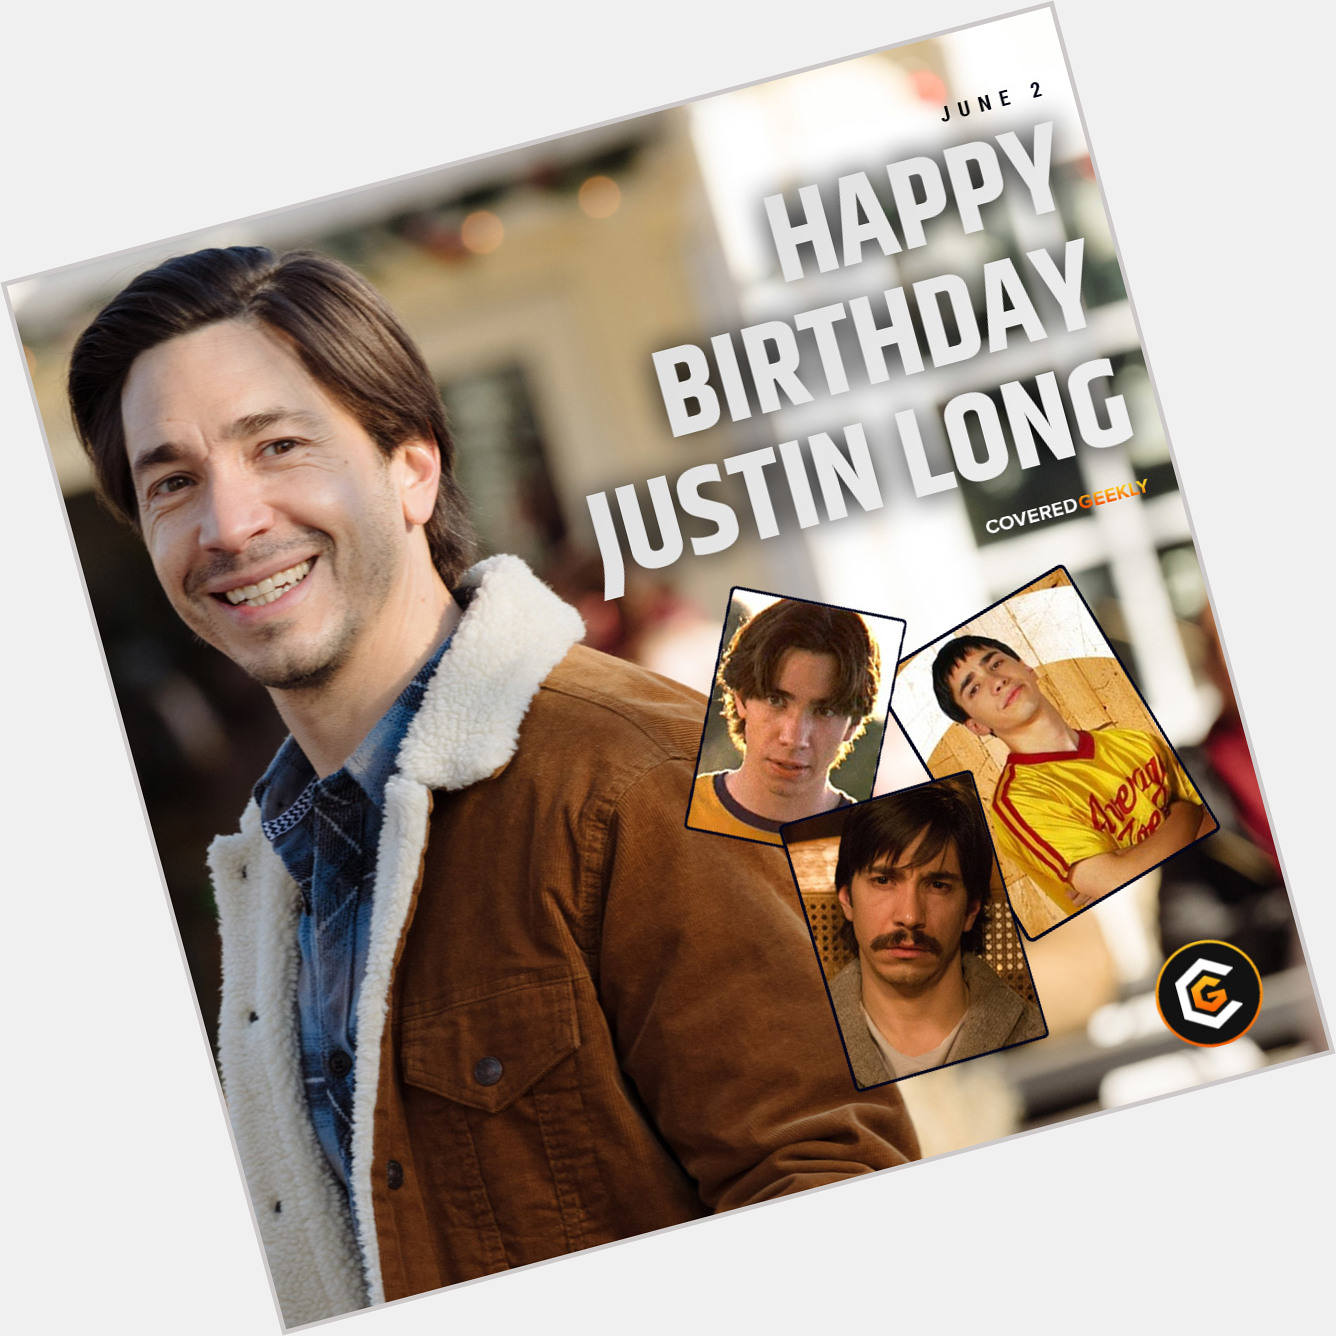 Happy Birthday to Justin Long! 